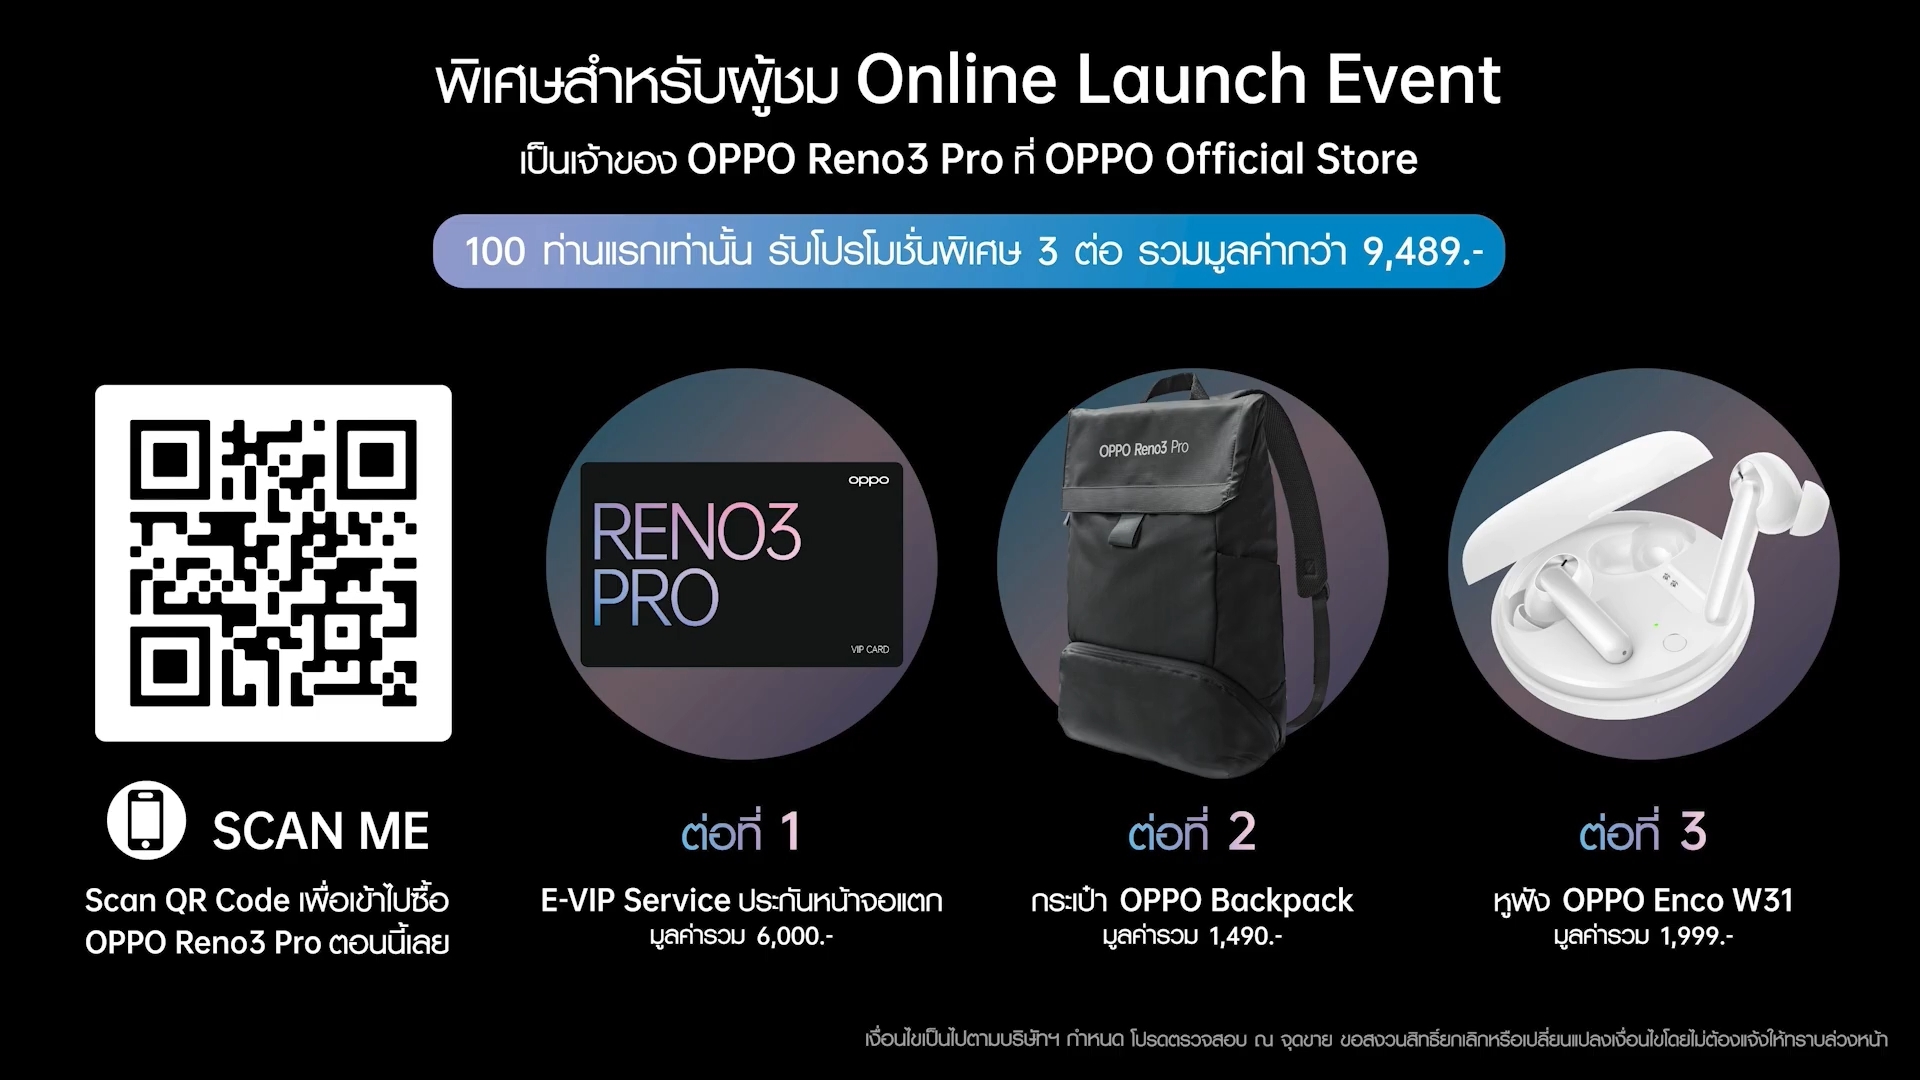 OPPO Reno 3 Pro ดีไซน์สวย กล้องหน้าคู่ 44 MP กล้องหลัง 4 เลนส์ เปิดตัวอย่างเป็นทางการแล้ว ราคา 18,990 บาท